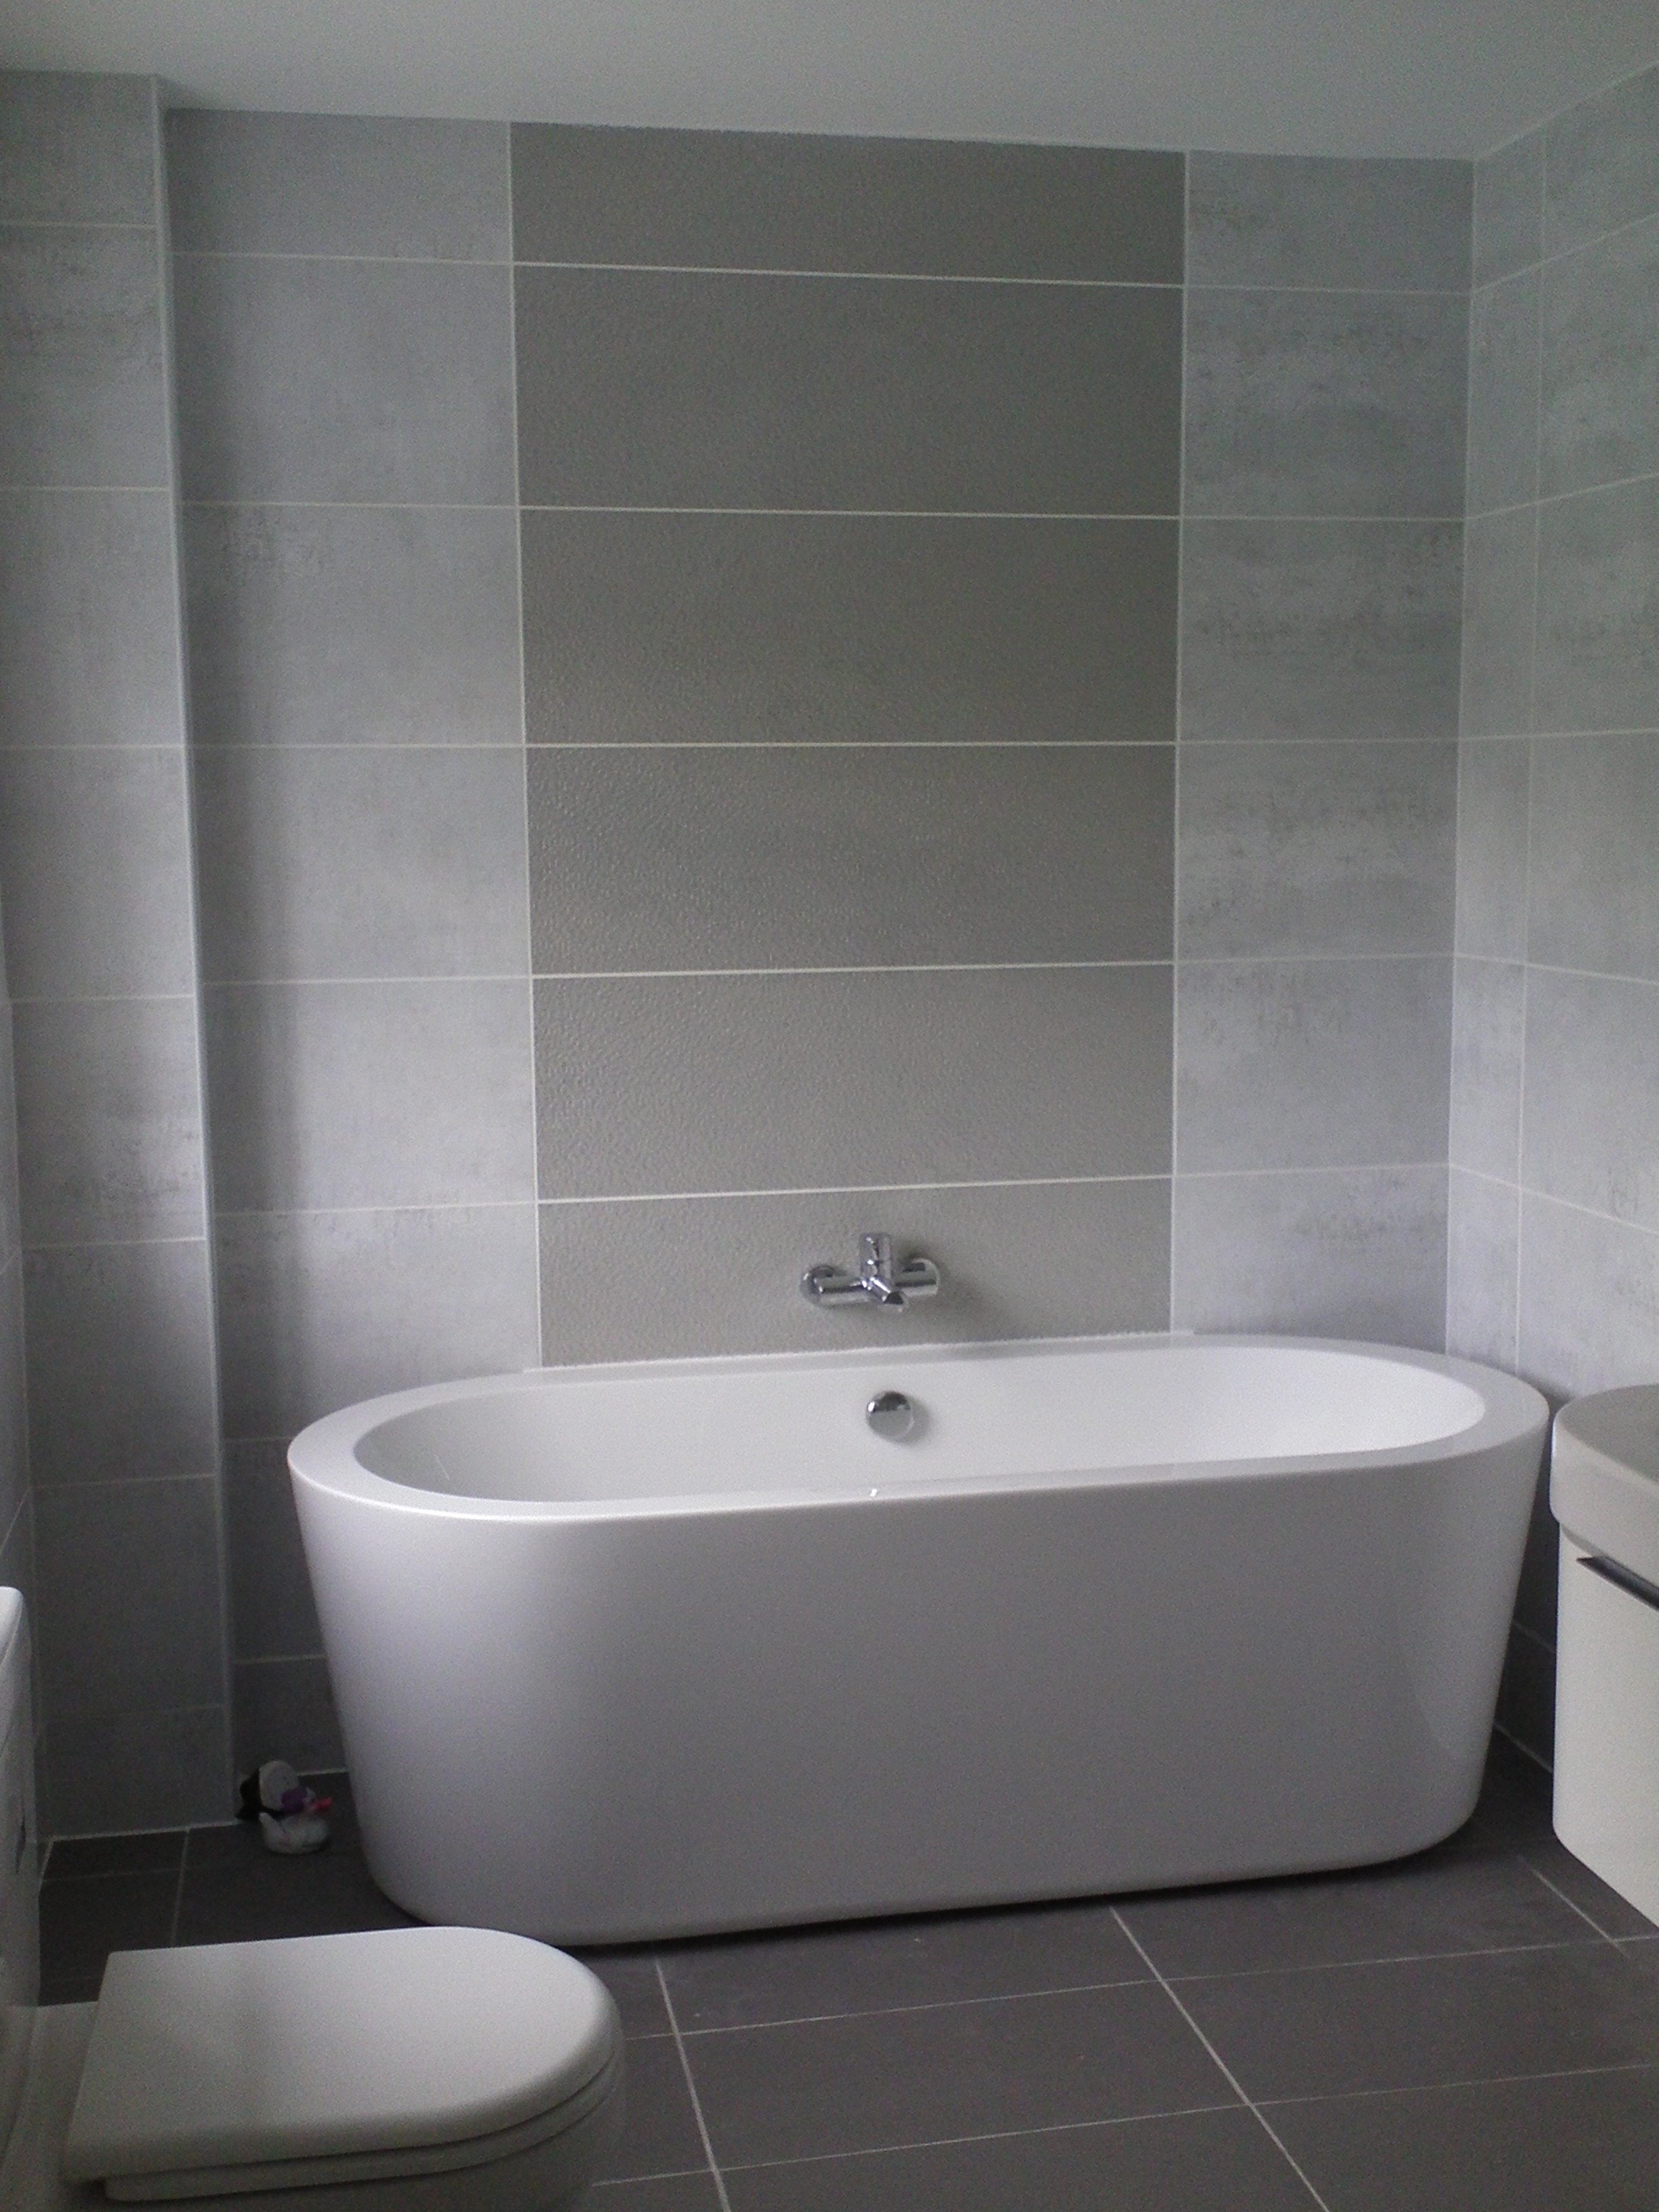 10 Famous Bathroom Wall Tile Ideas For Small Bathrooms